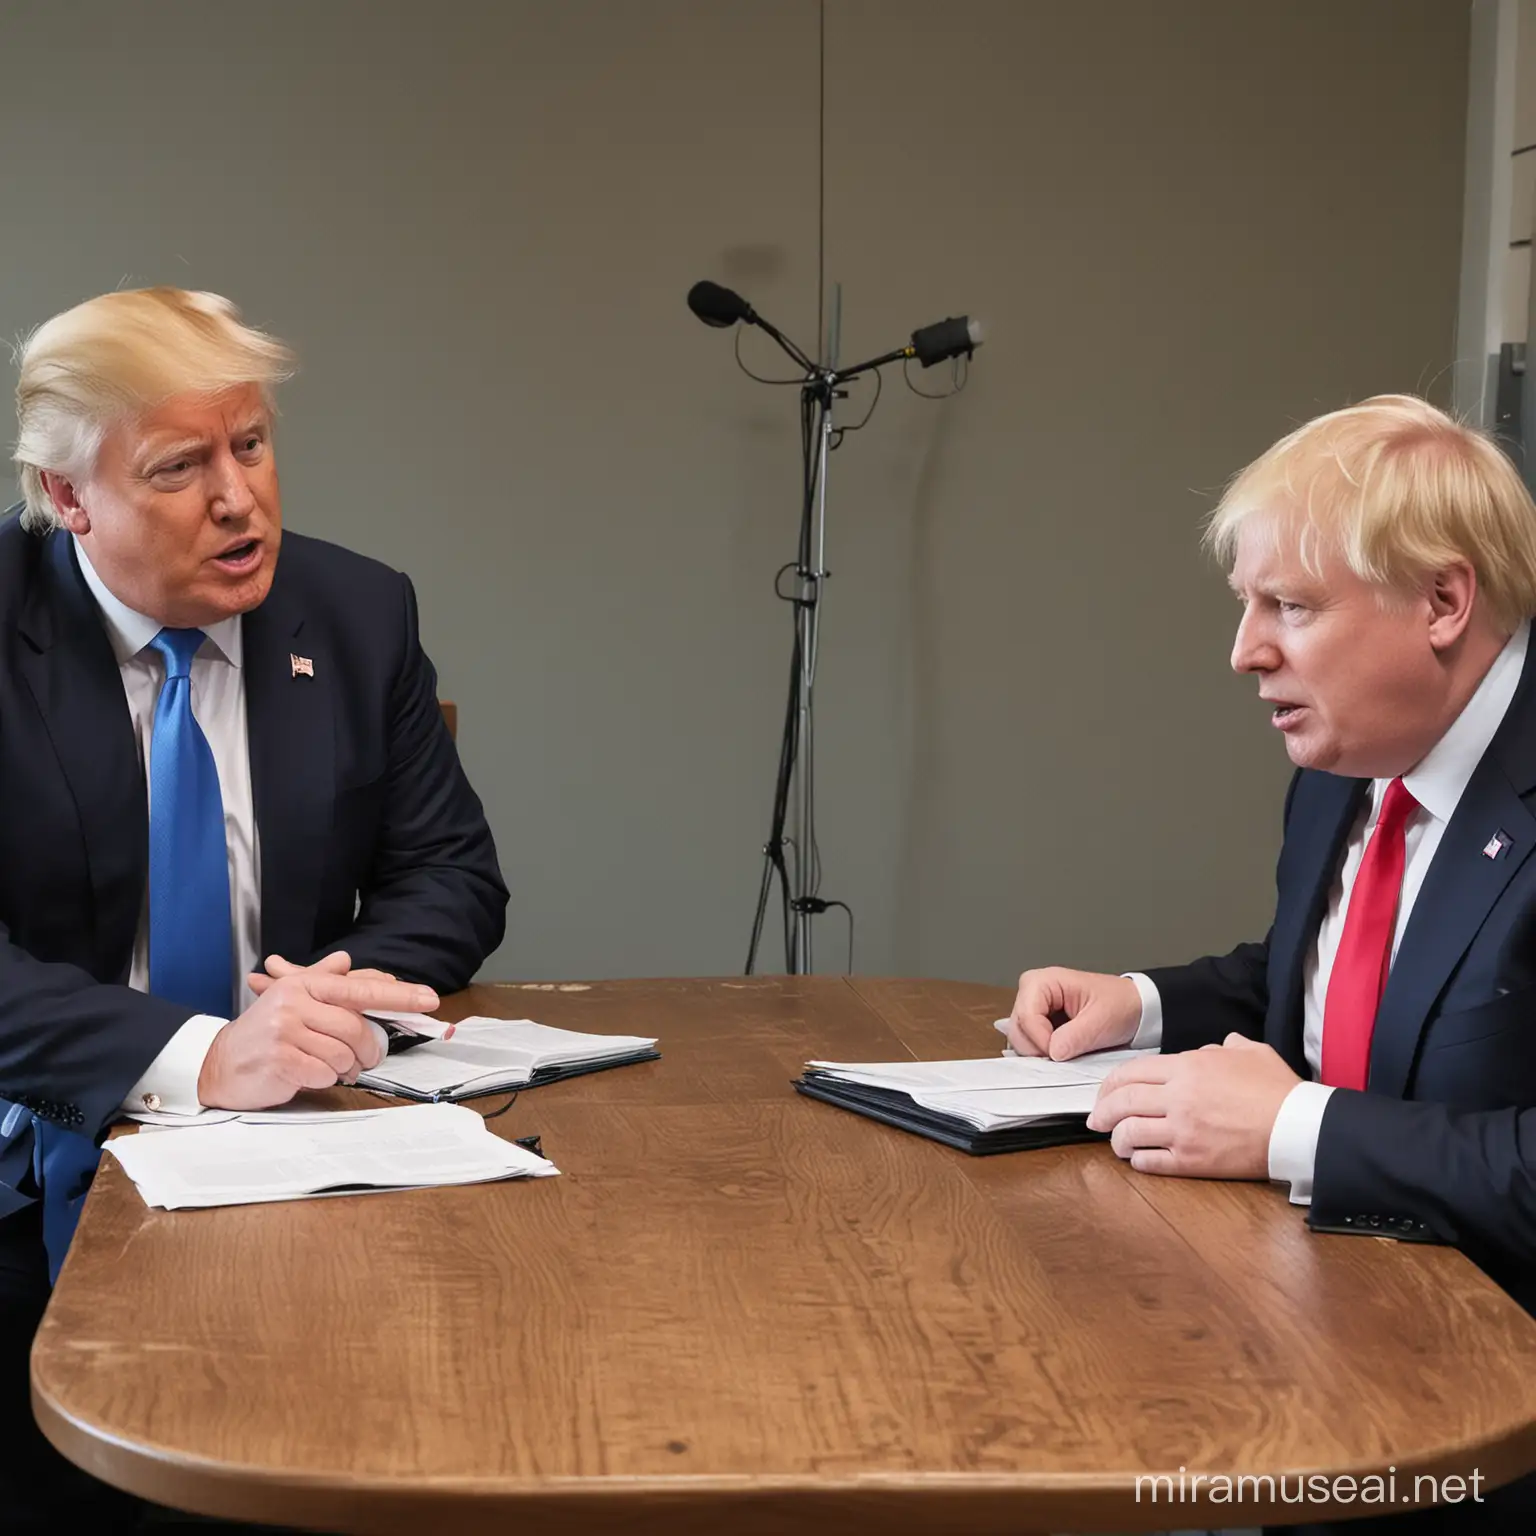 Donald Trump and Boris Johnson talking about brain waves


